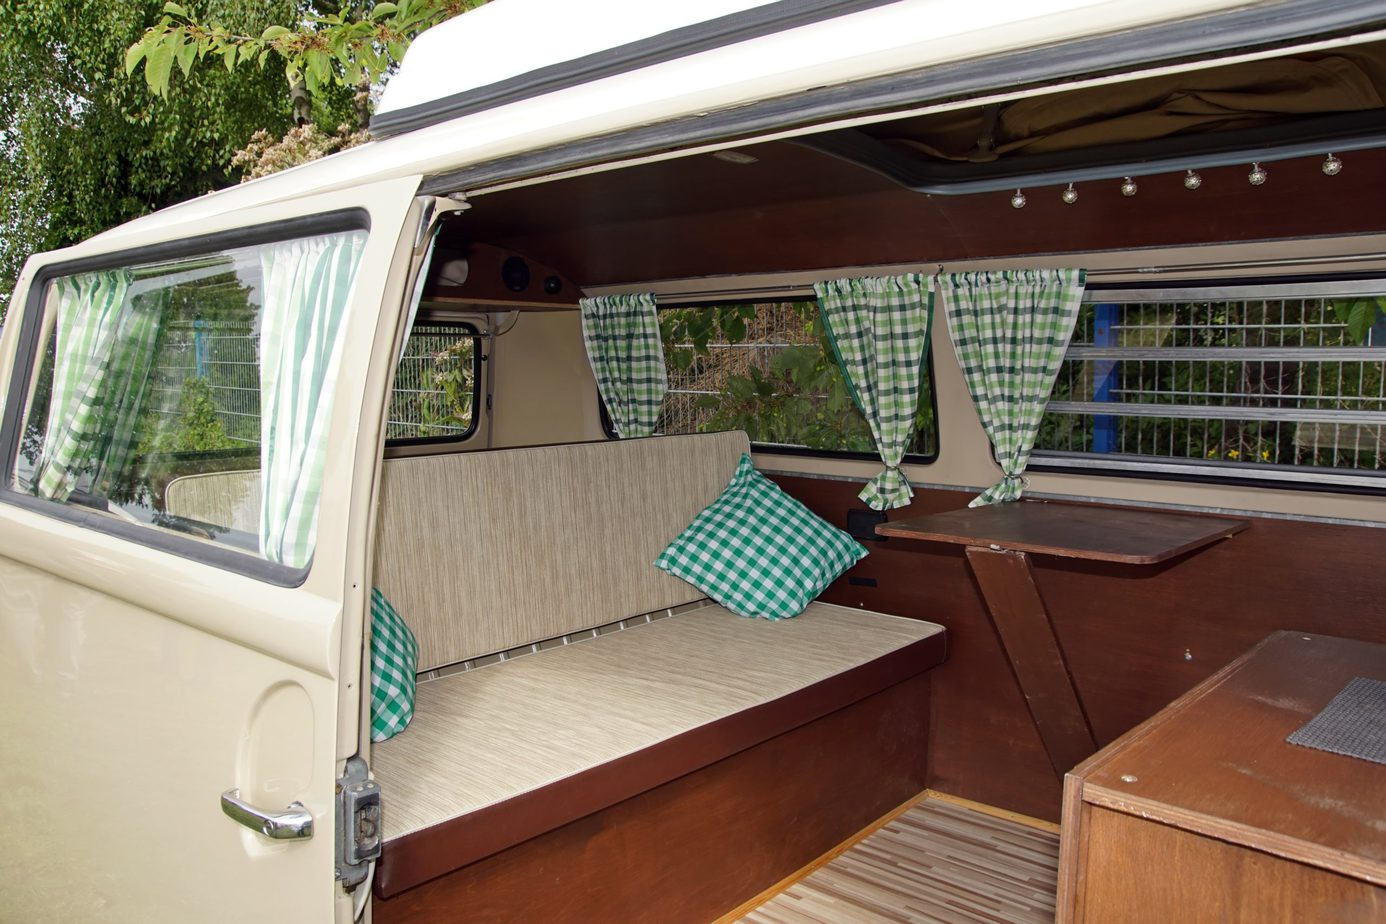 A sofa like set up with curtain windows inside a van